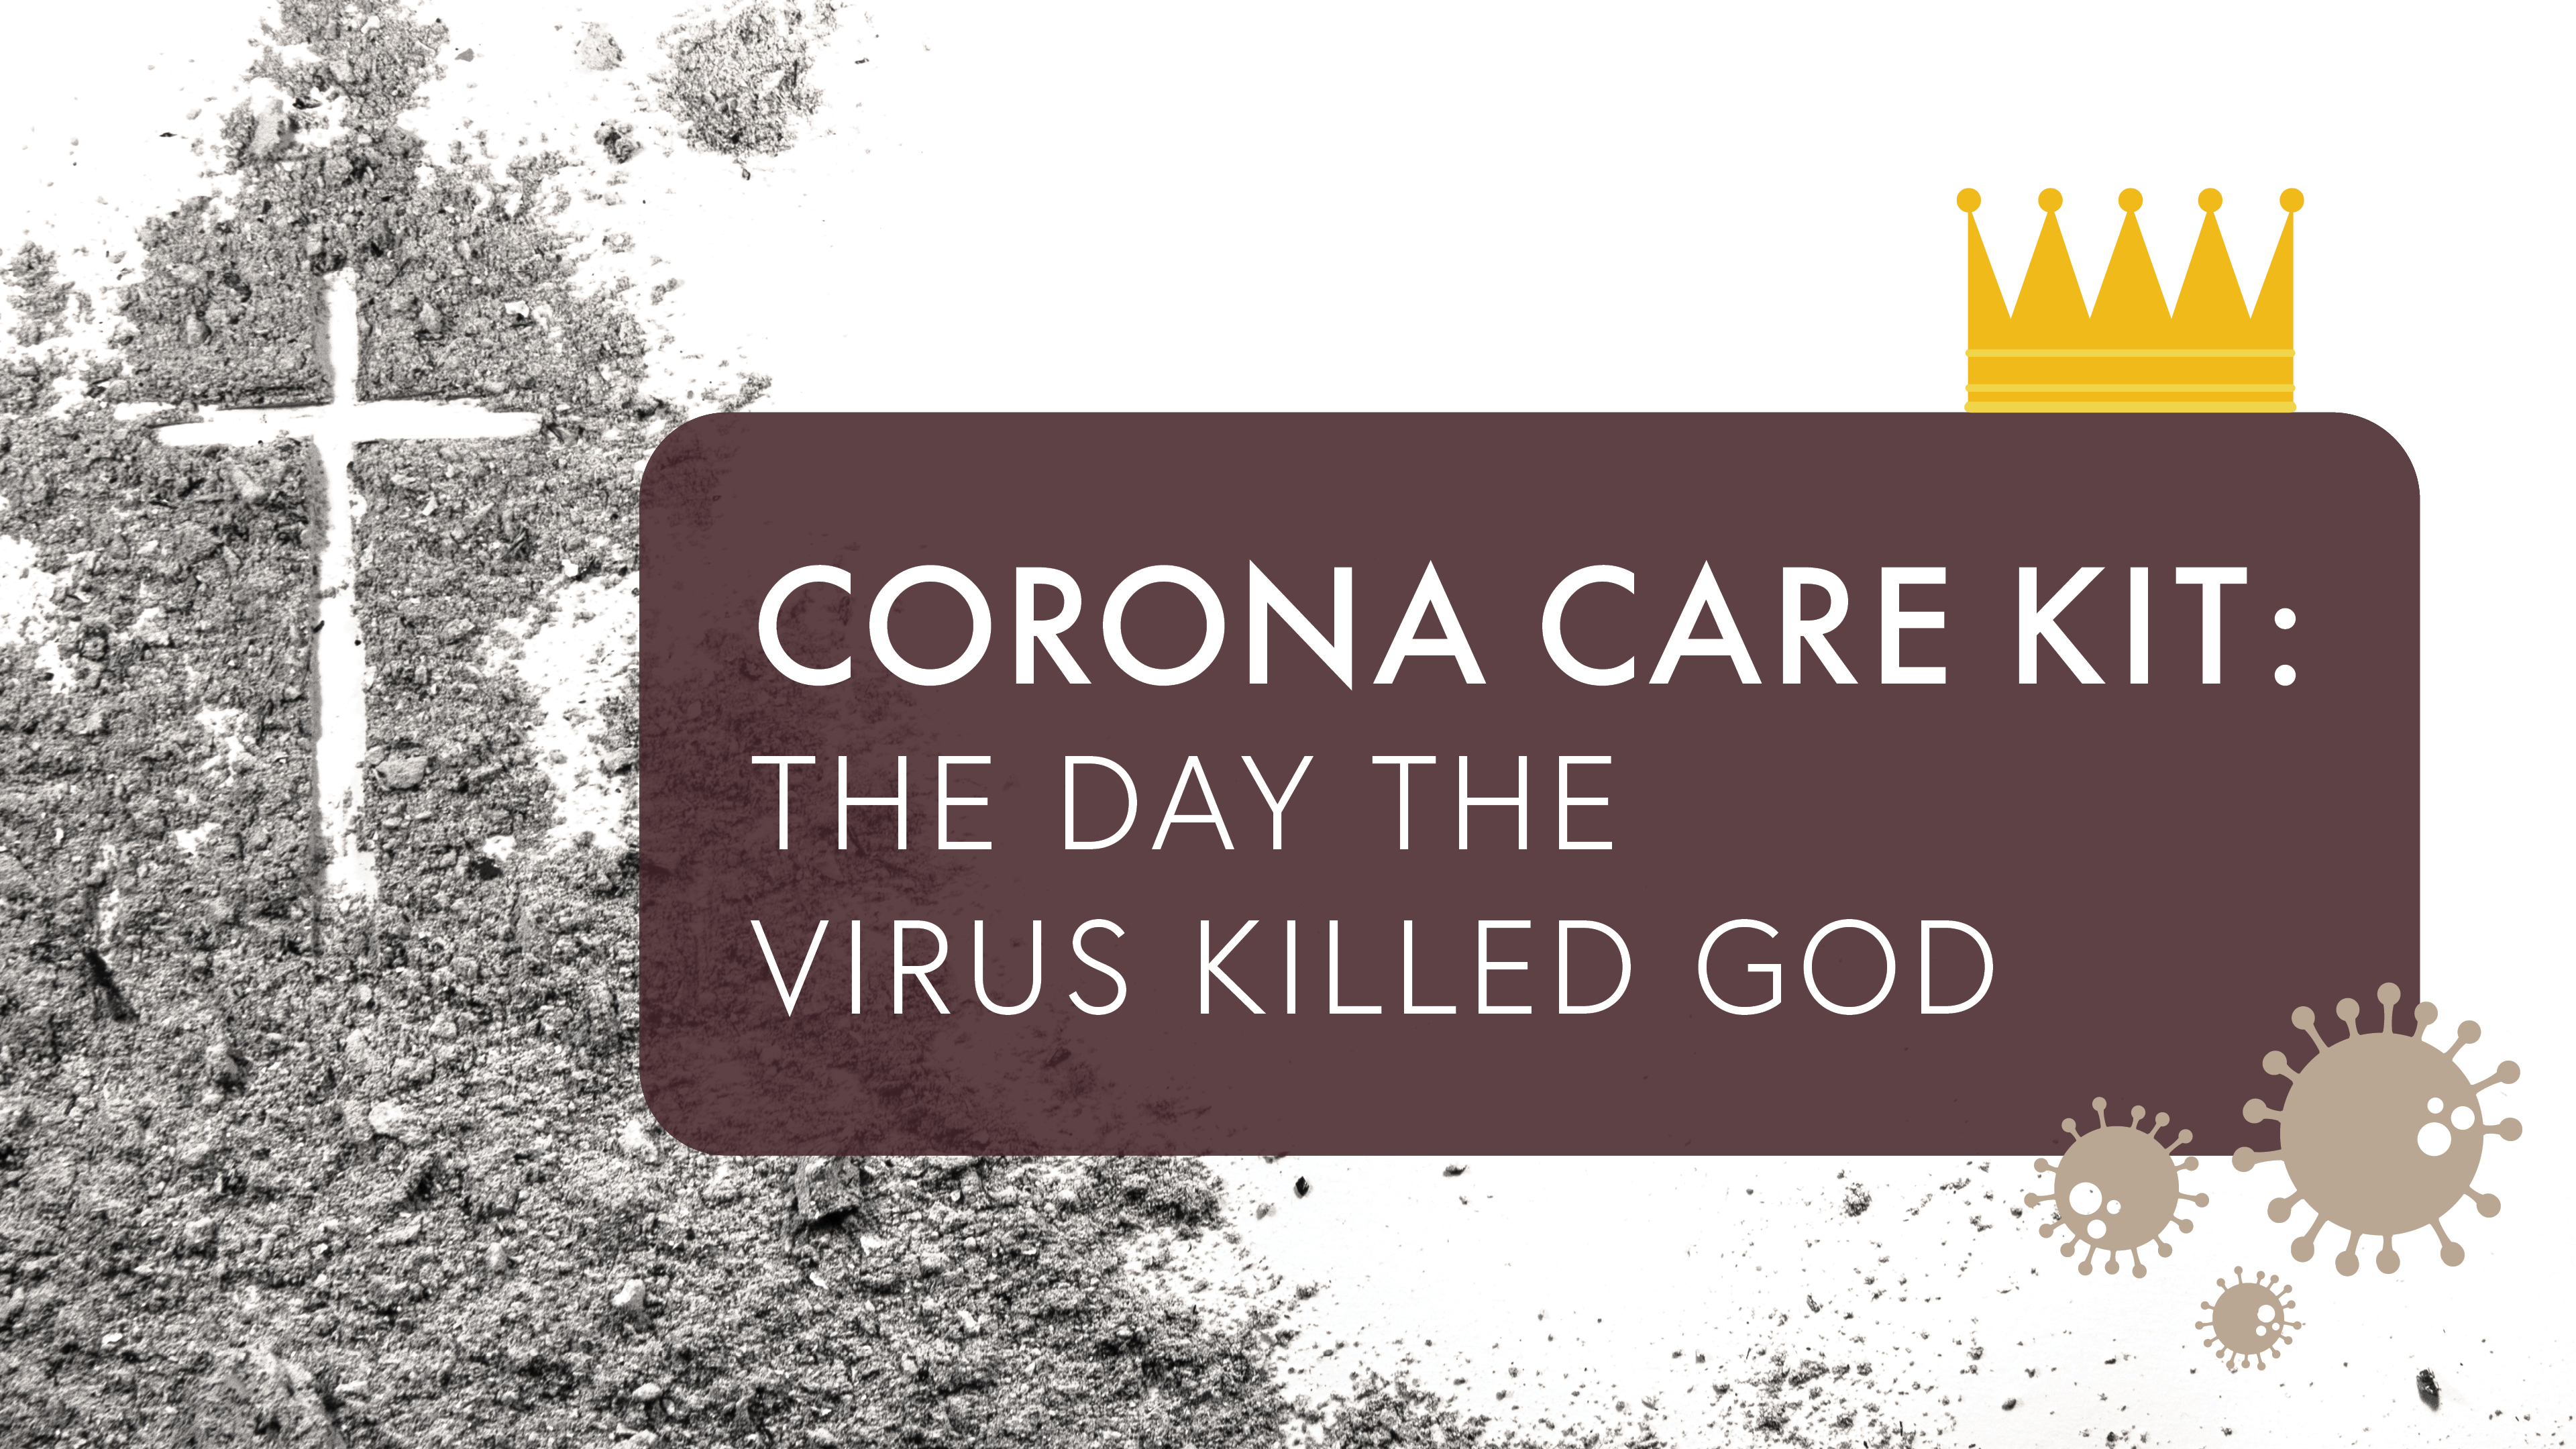 The Day the Virus Killed God